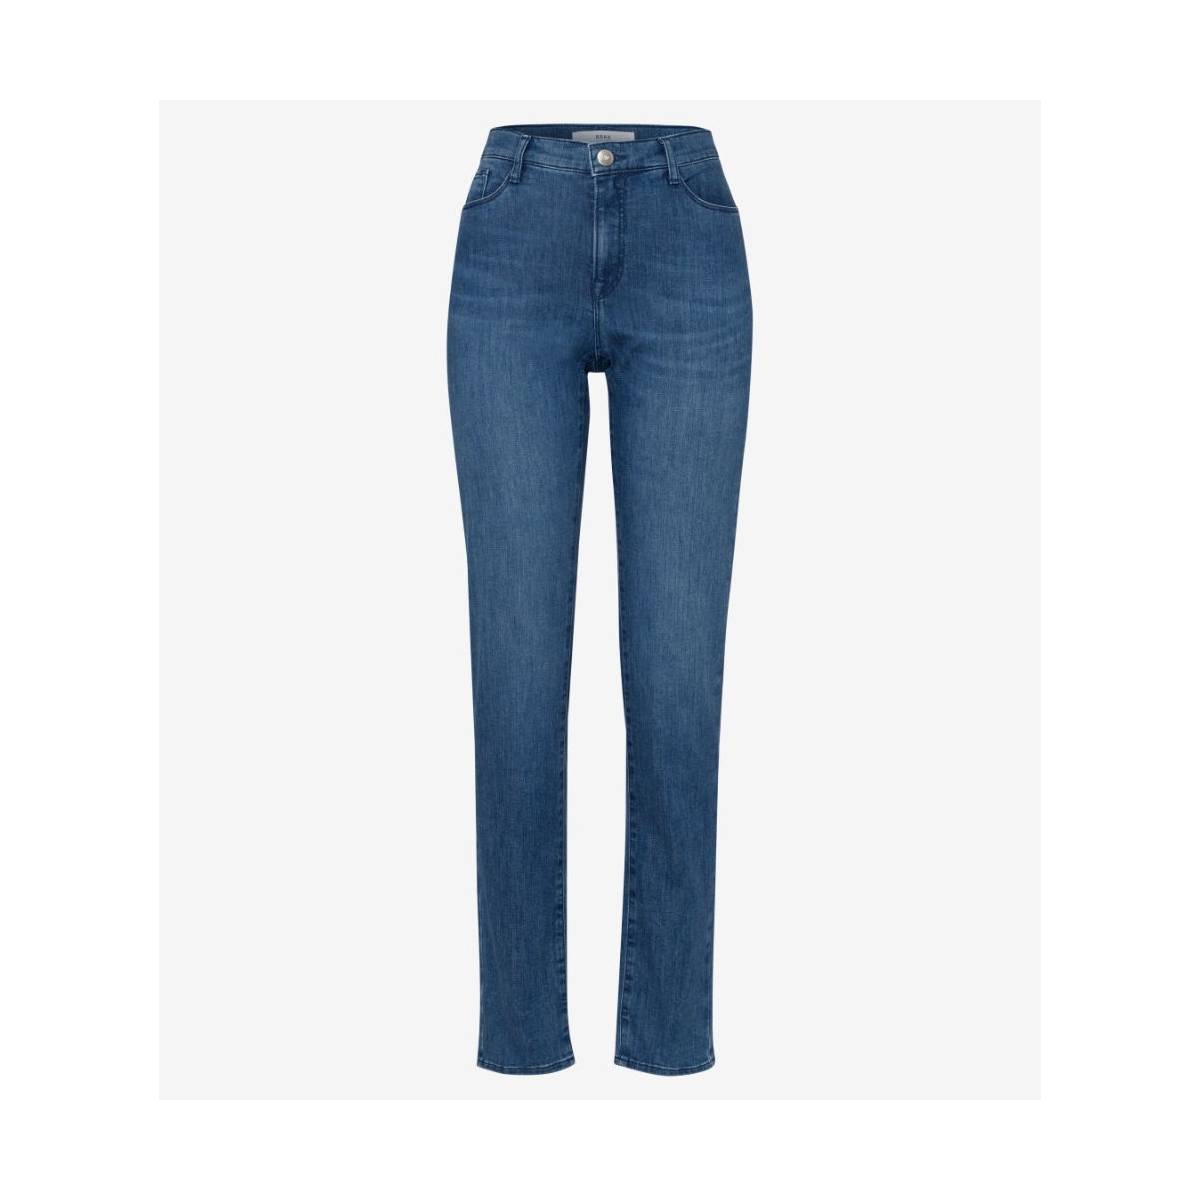 BRAX  broeken jeans -  model 71-4008 09916920 - Dameskleding broeken jeans